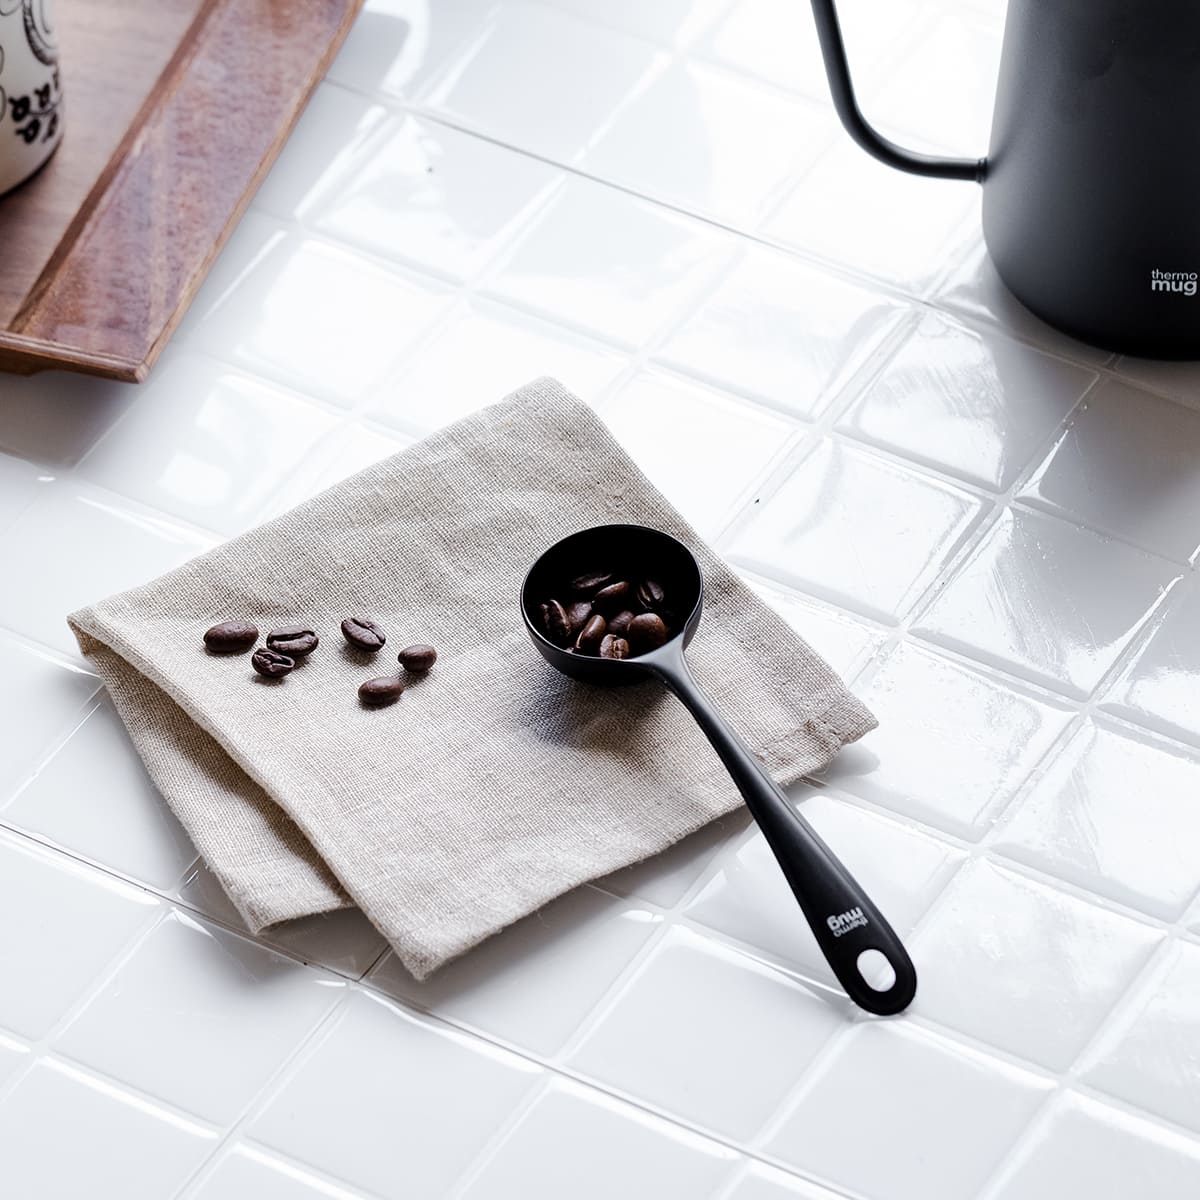 【thermo mug】TSUBAME 燕 COFFEE MEASURE SPOON コーヒーメジャースプーン_T-CMS21(ブラック)